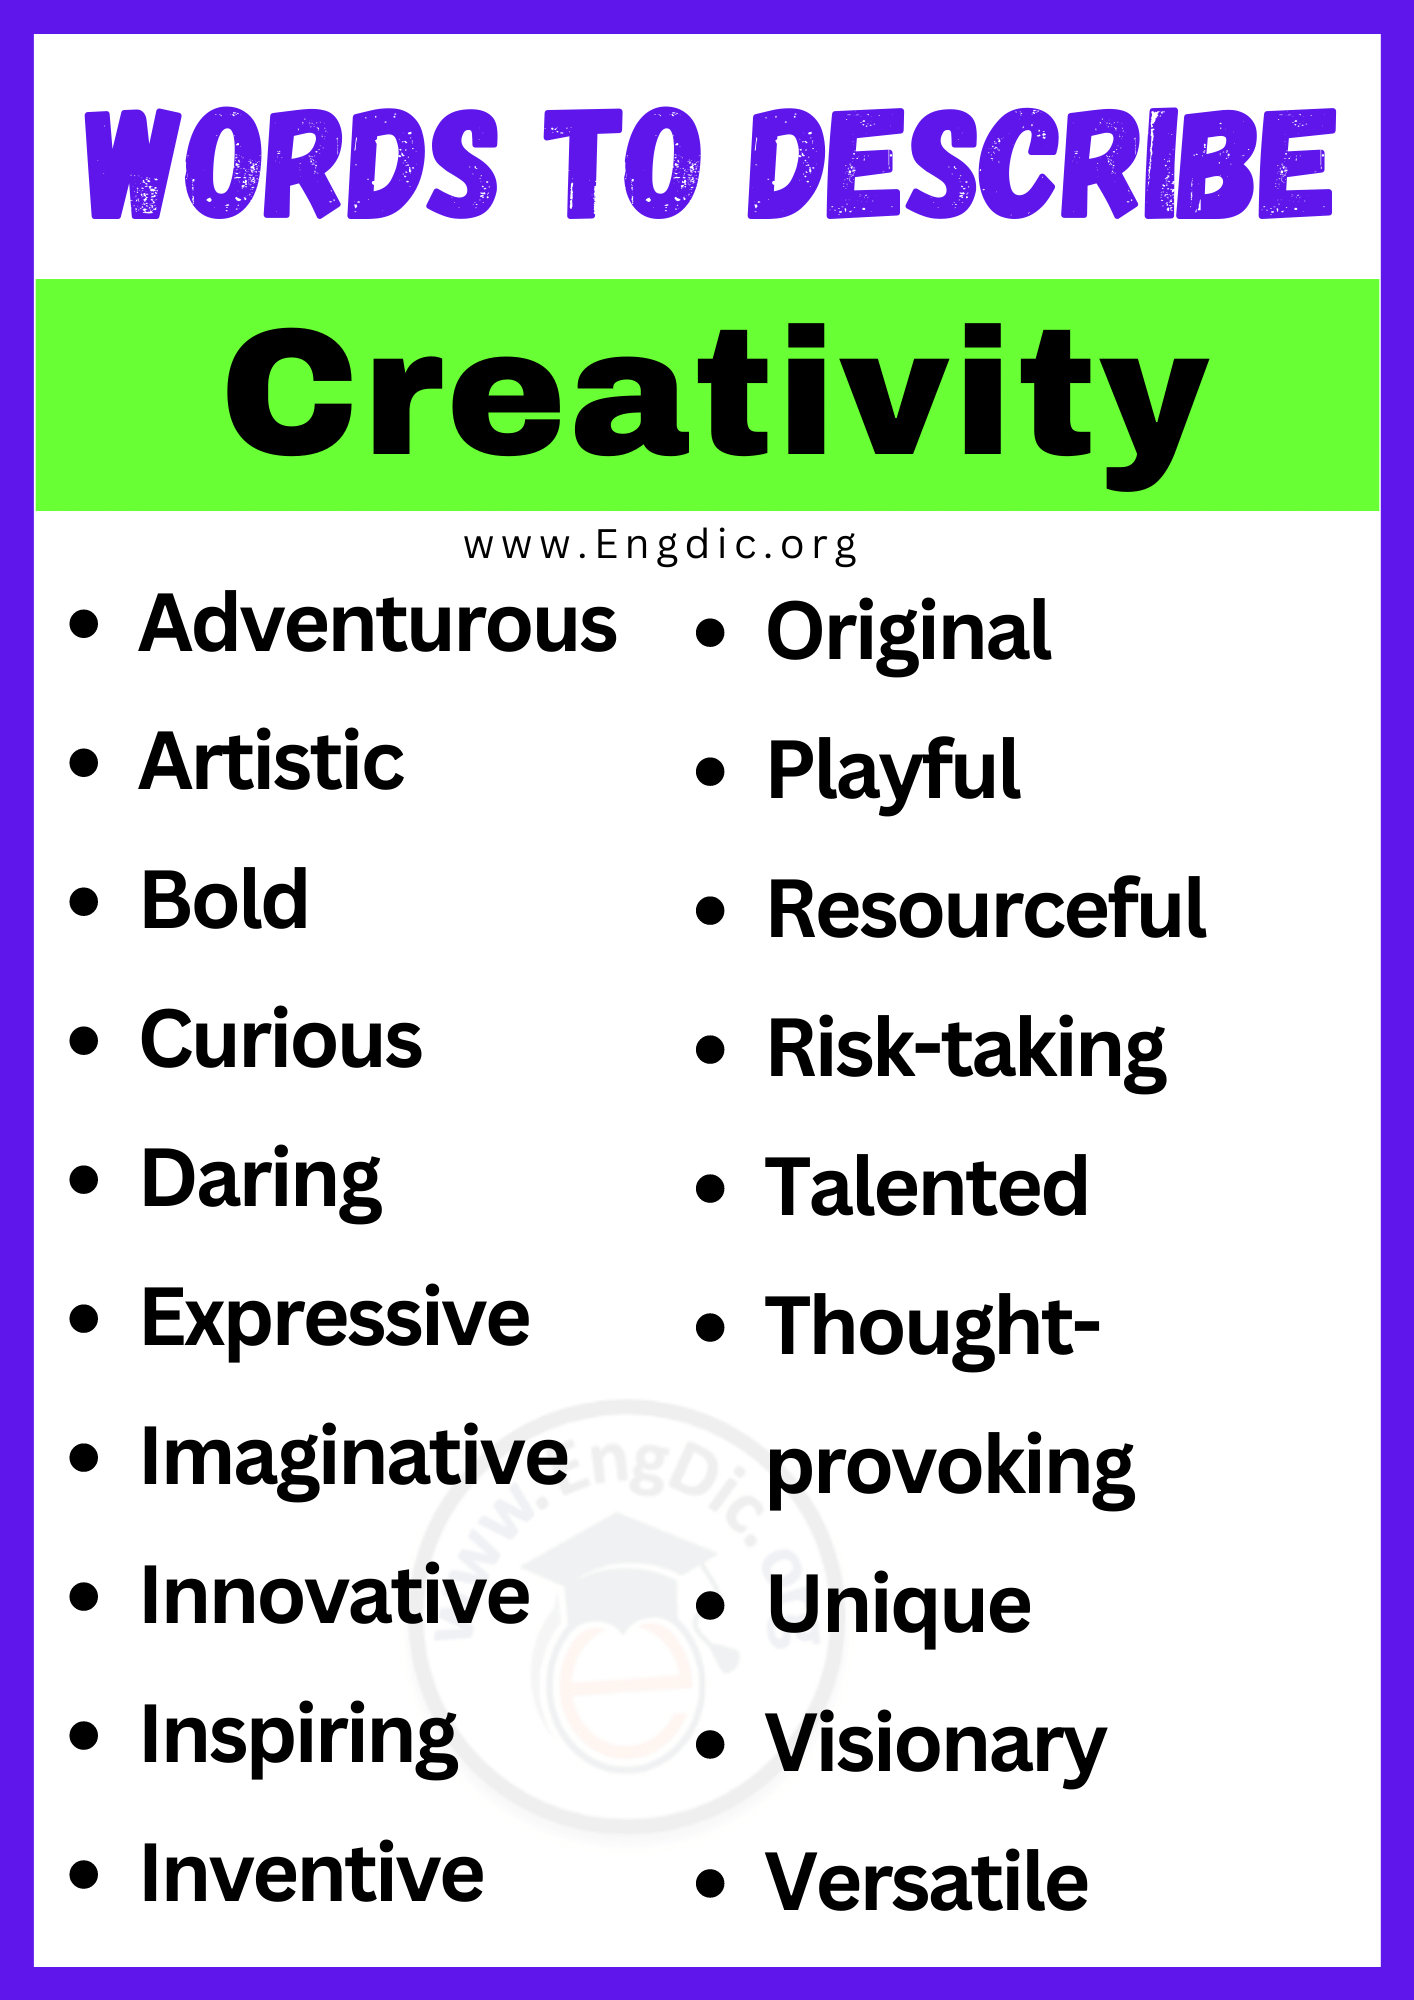 Words to Describe Creativity